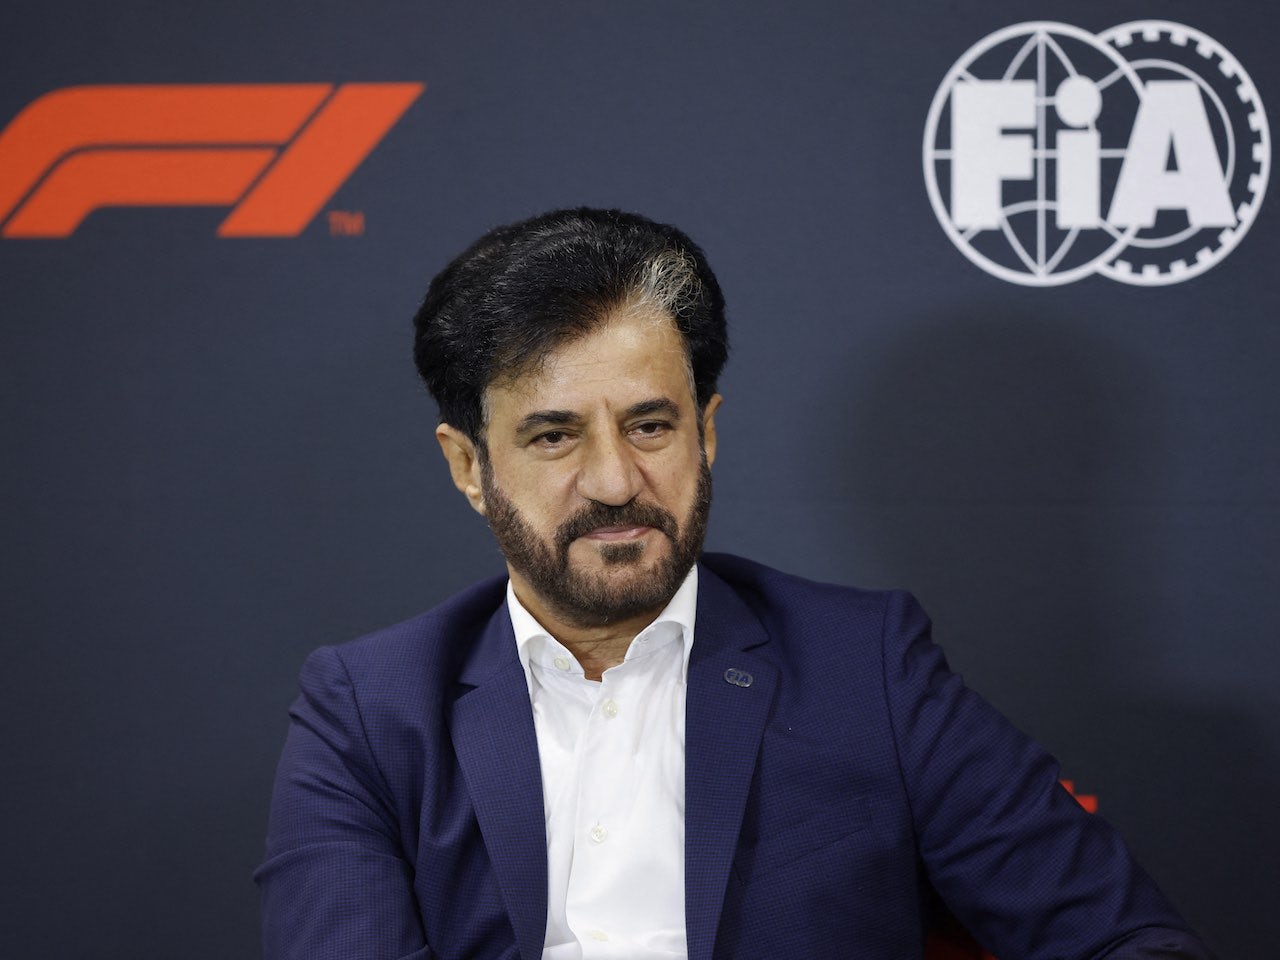 FIA president says social media may 'destroy' F1